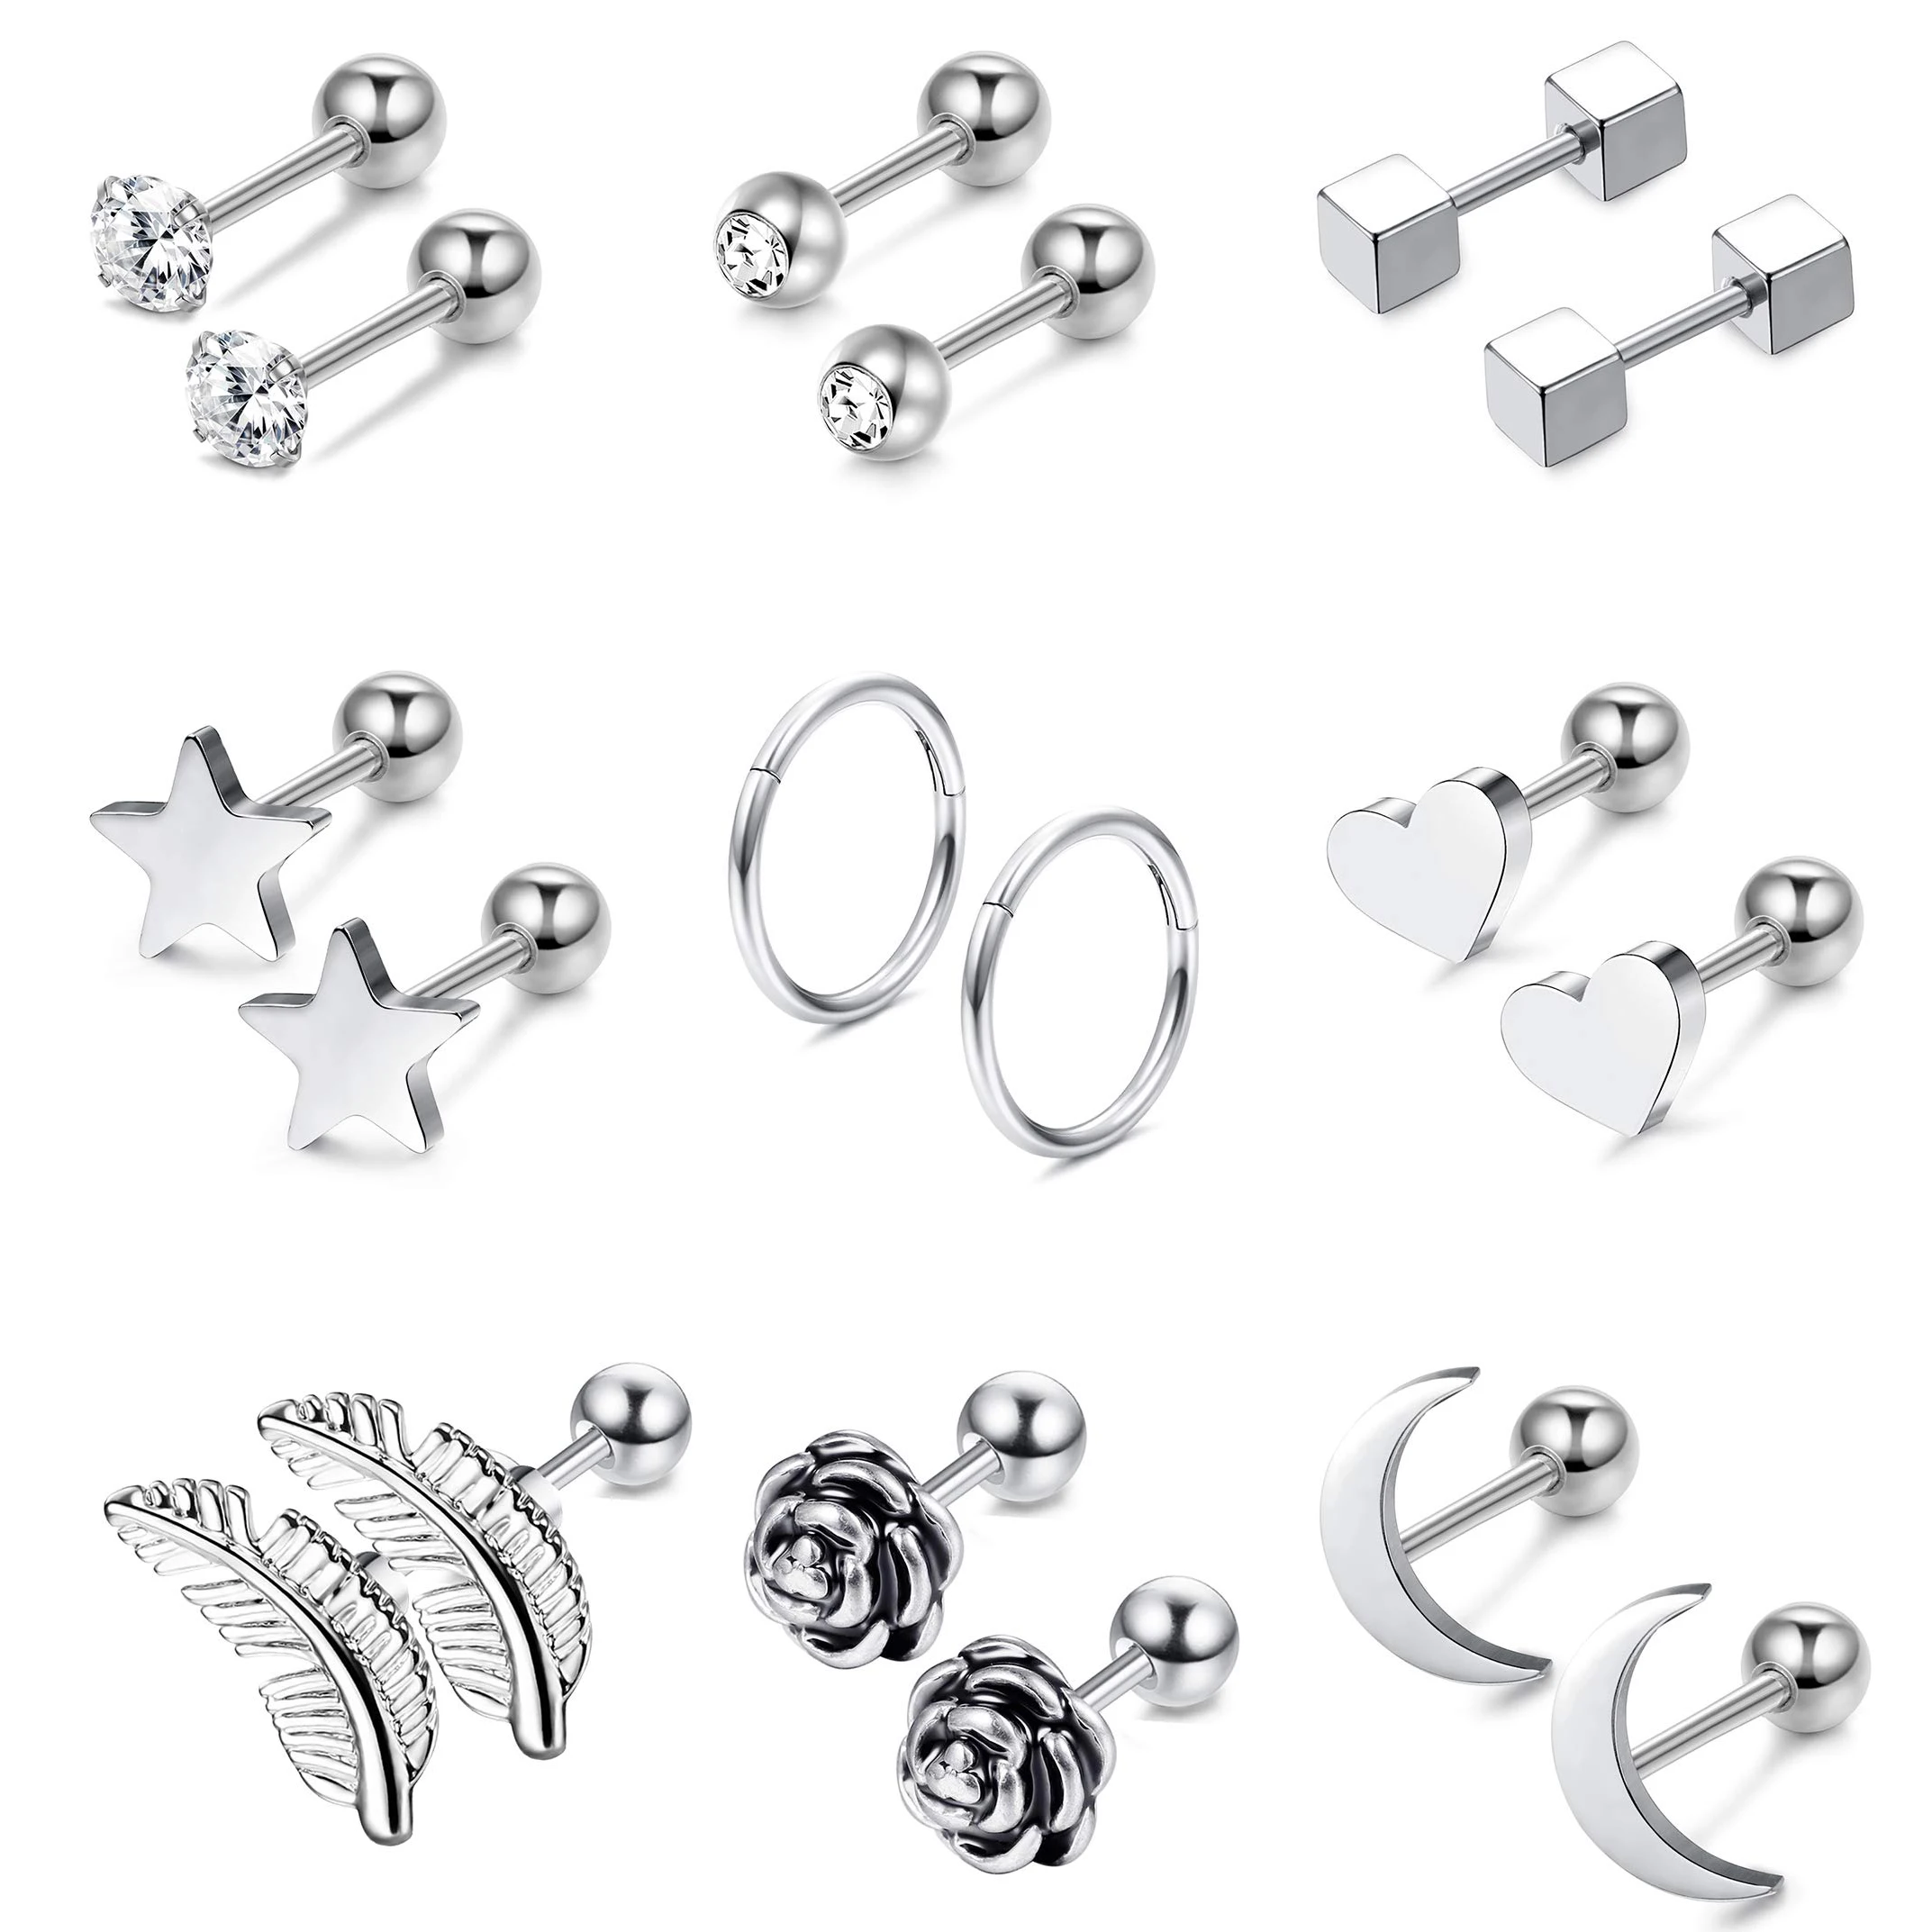 

9Pairs 316L Surgical Steel Ear Cartilage Stud Earrings for Men Women CZ Barbell Helix Tragus Stud Piercings Jewelry